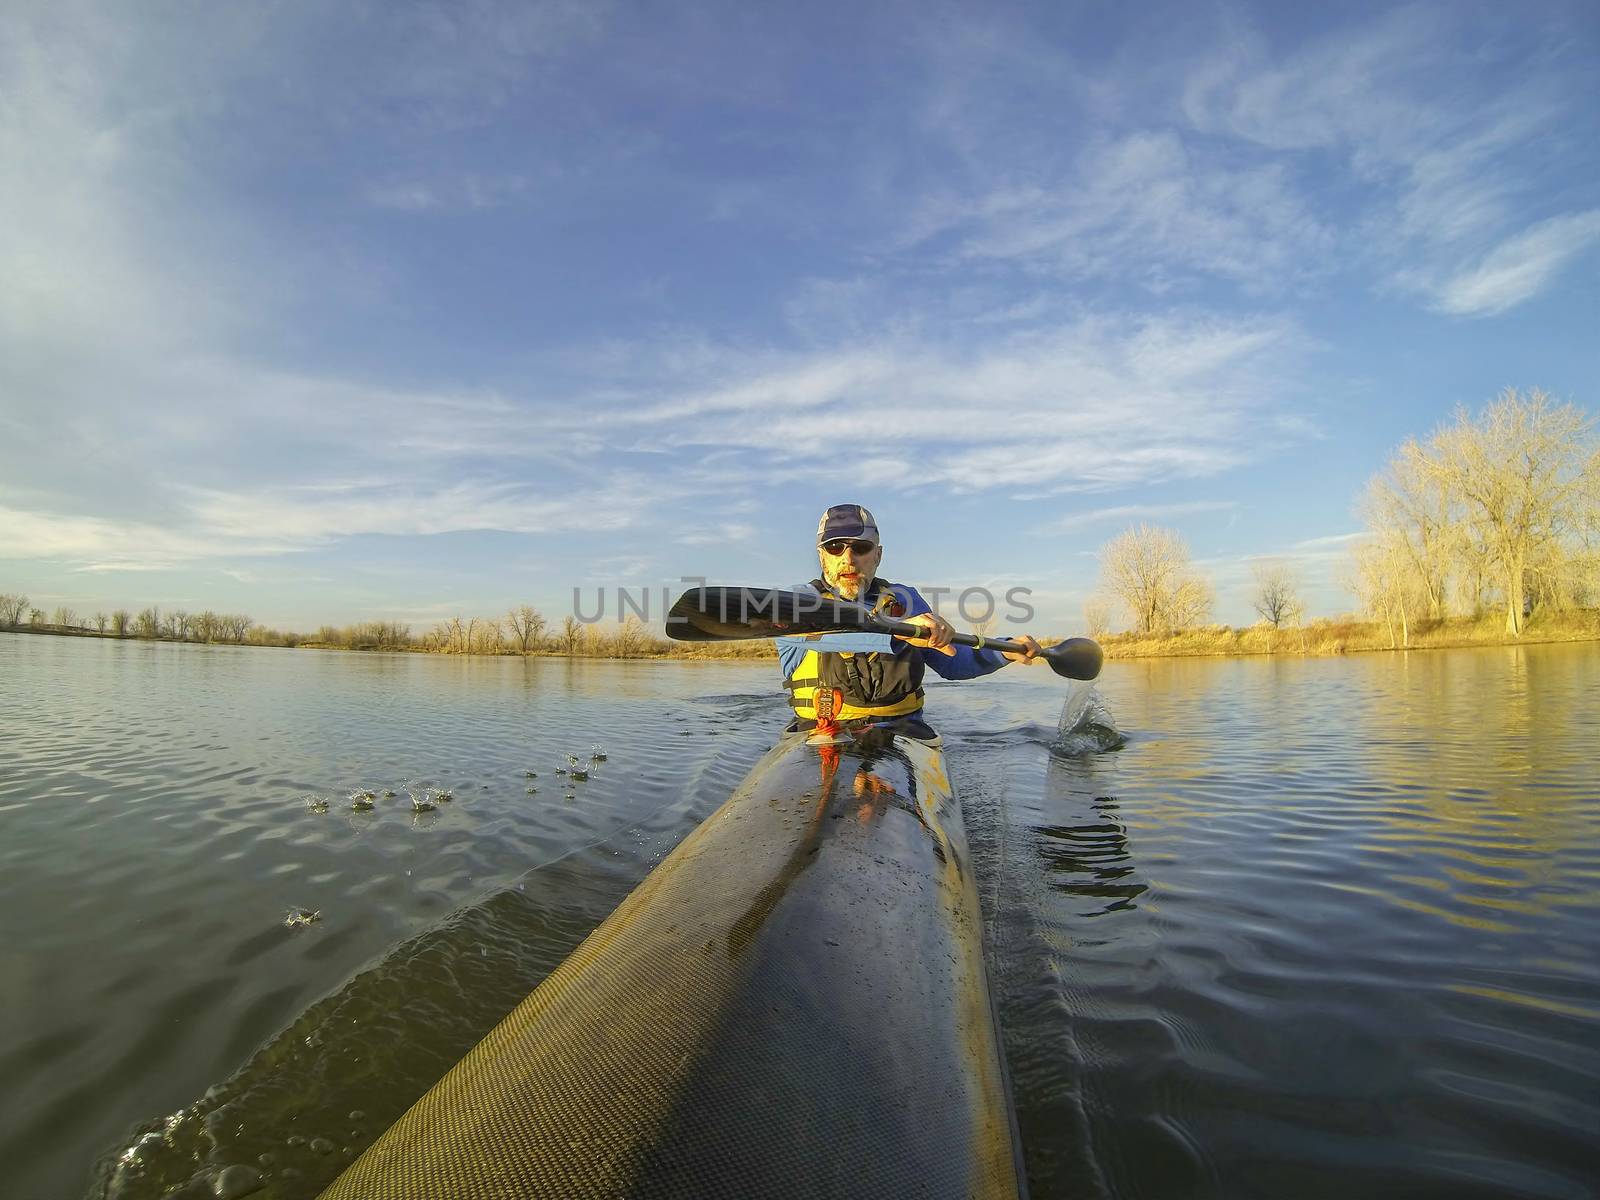 racing kayak against sunset by PixelsAway